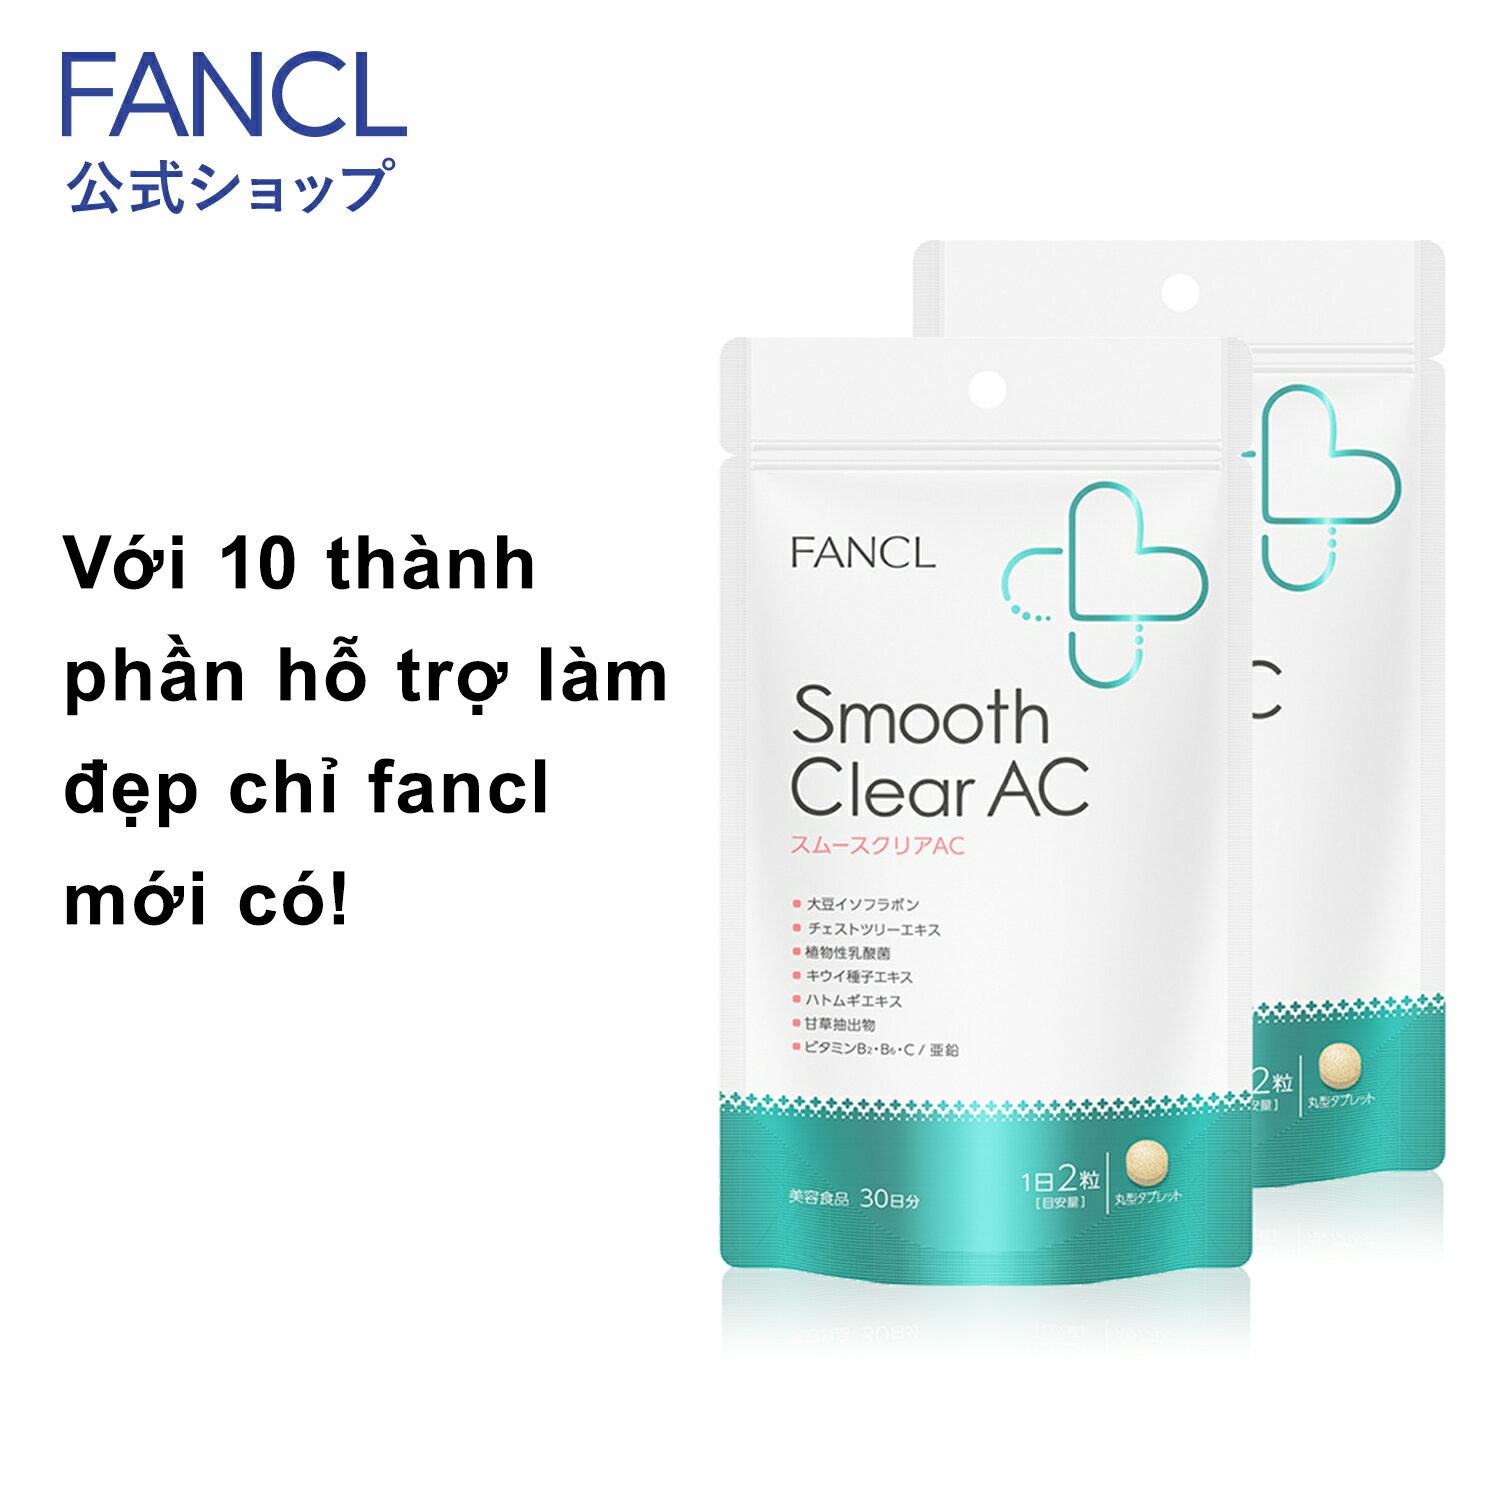 Smooth Clear AC 60days Vietnamese page ファンケル スムースクリアAC 60日分 